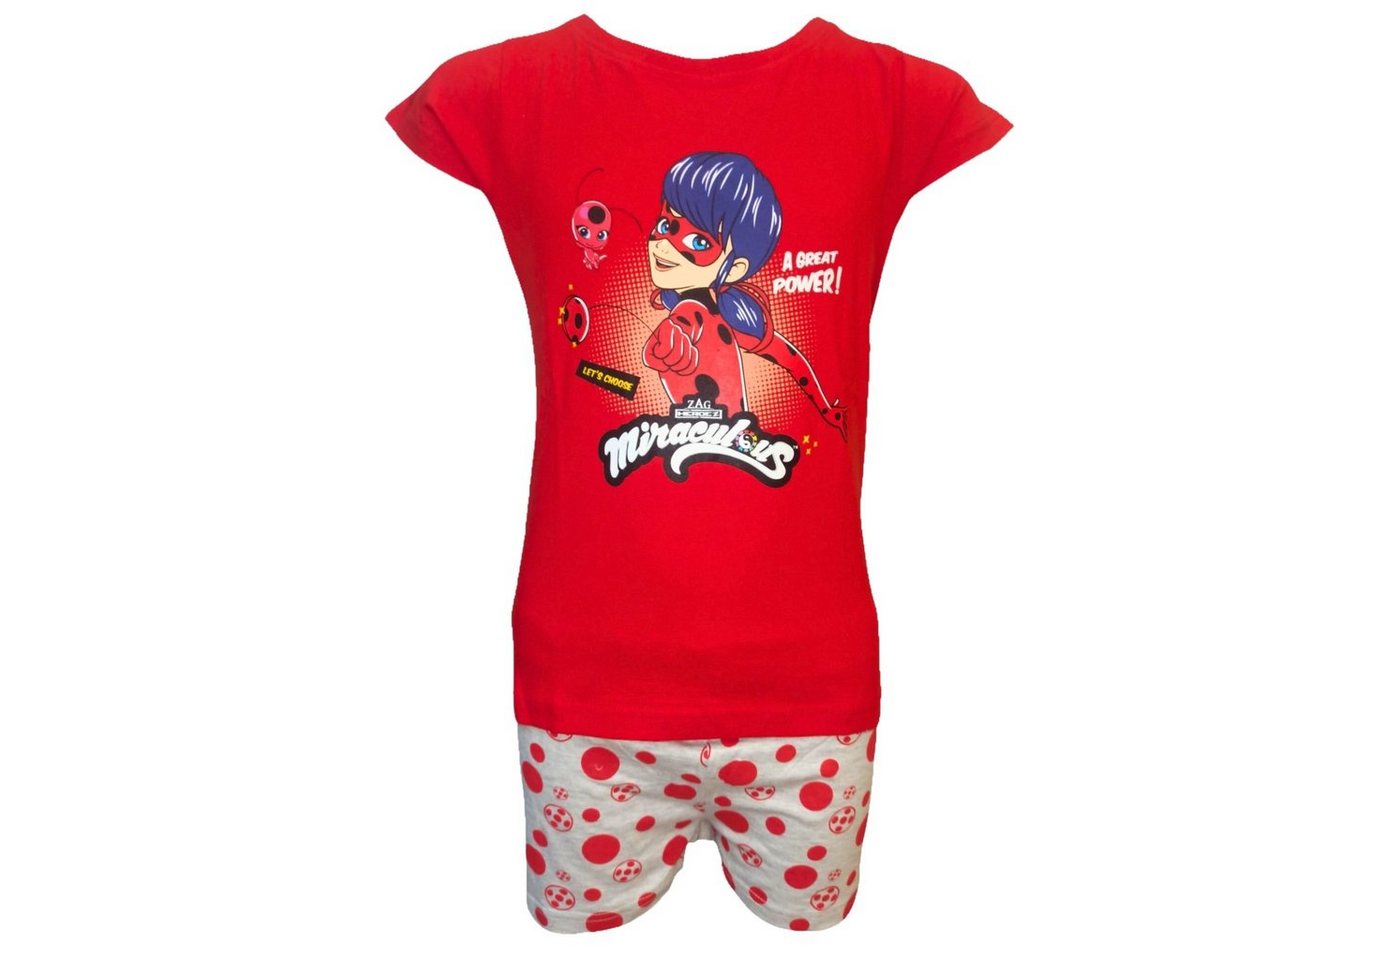 Miraculous - Ladybug Schlafanzug A GREAT POWER! (2 tlg) Pyjama Set kurz - Mädchen Shorty Gr. 116-146 cm von Miraculous - Ladybug